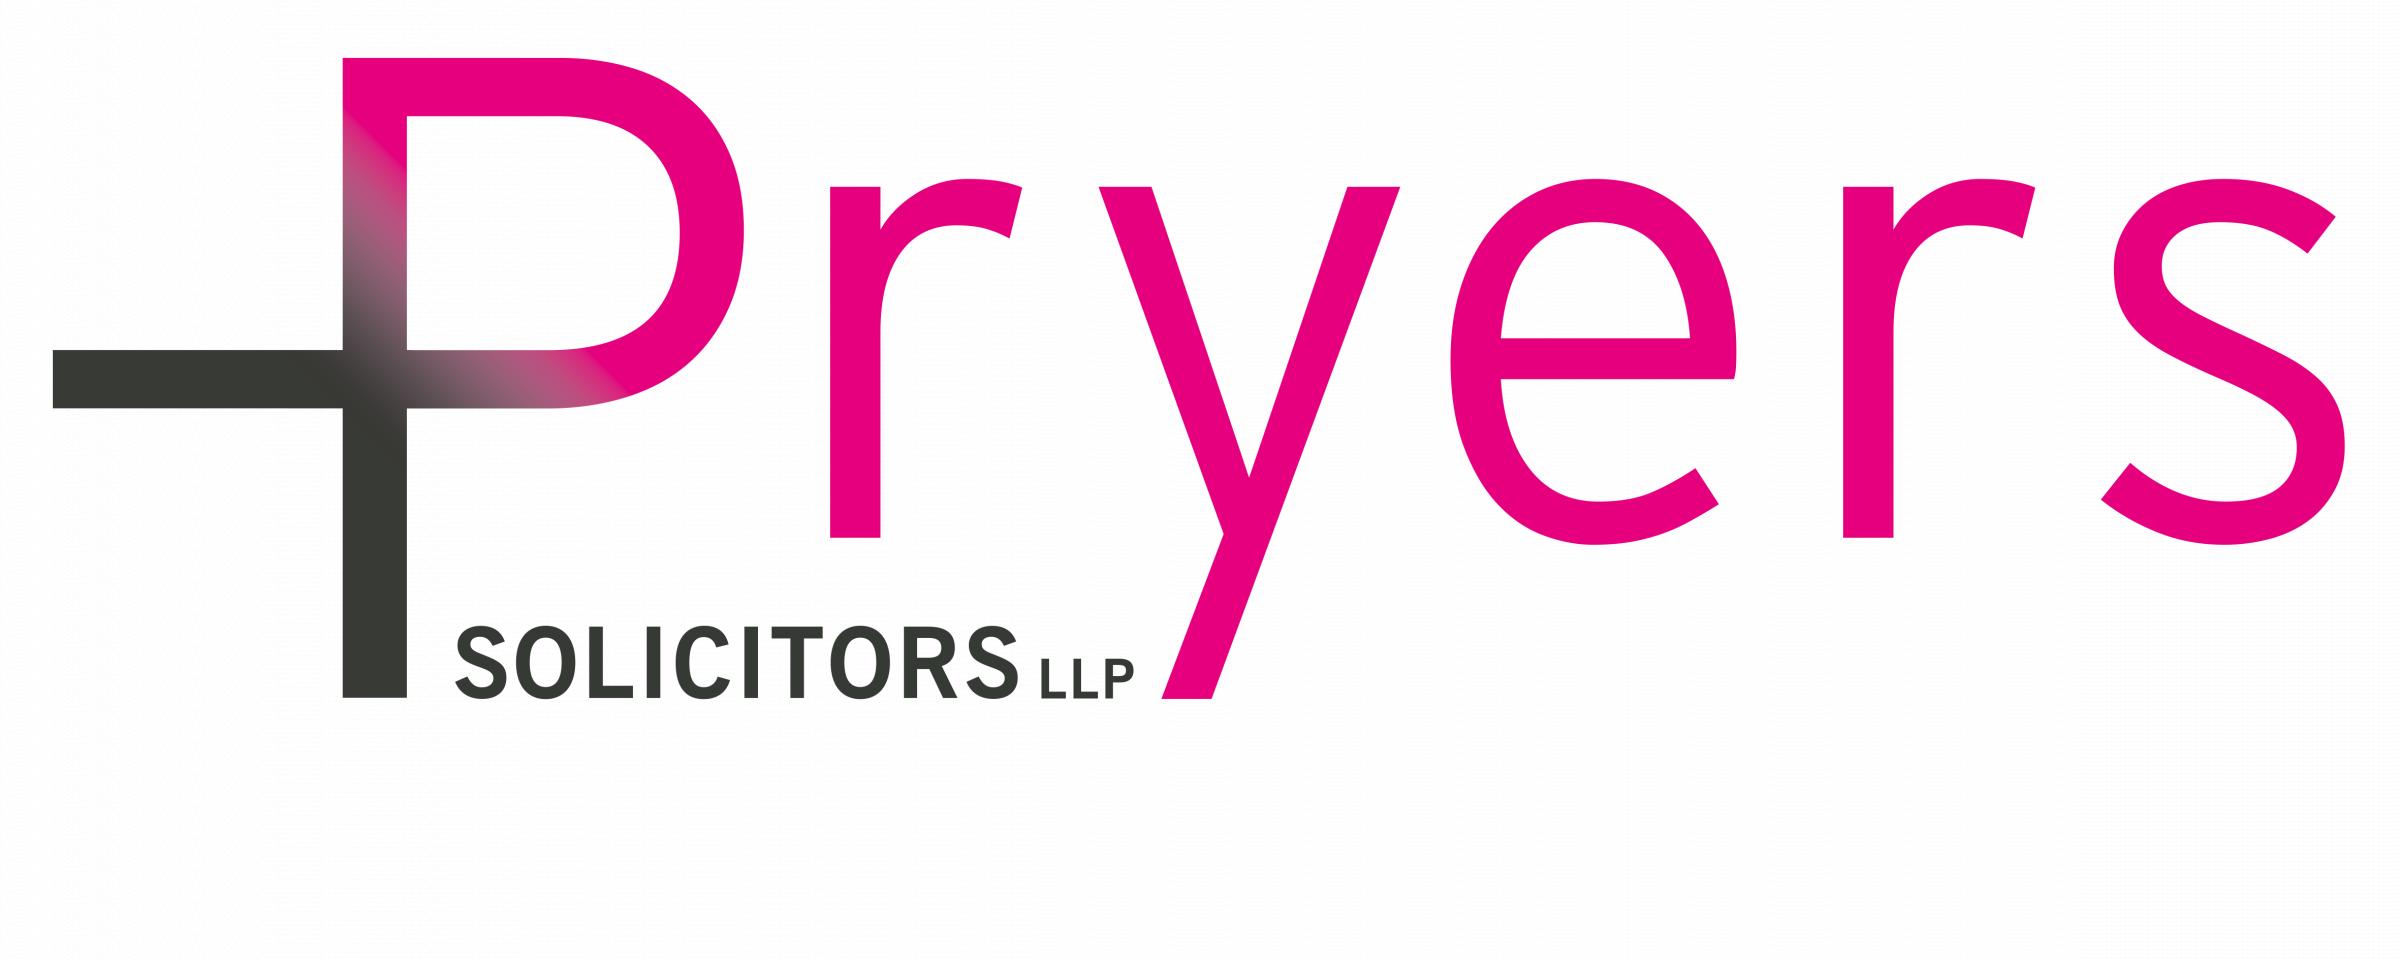 York Press: Pryers Solicitors logo